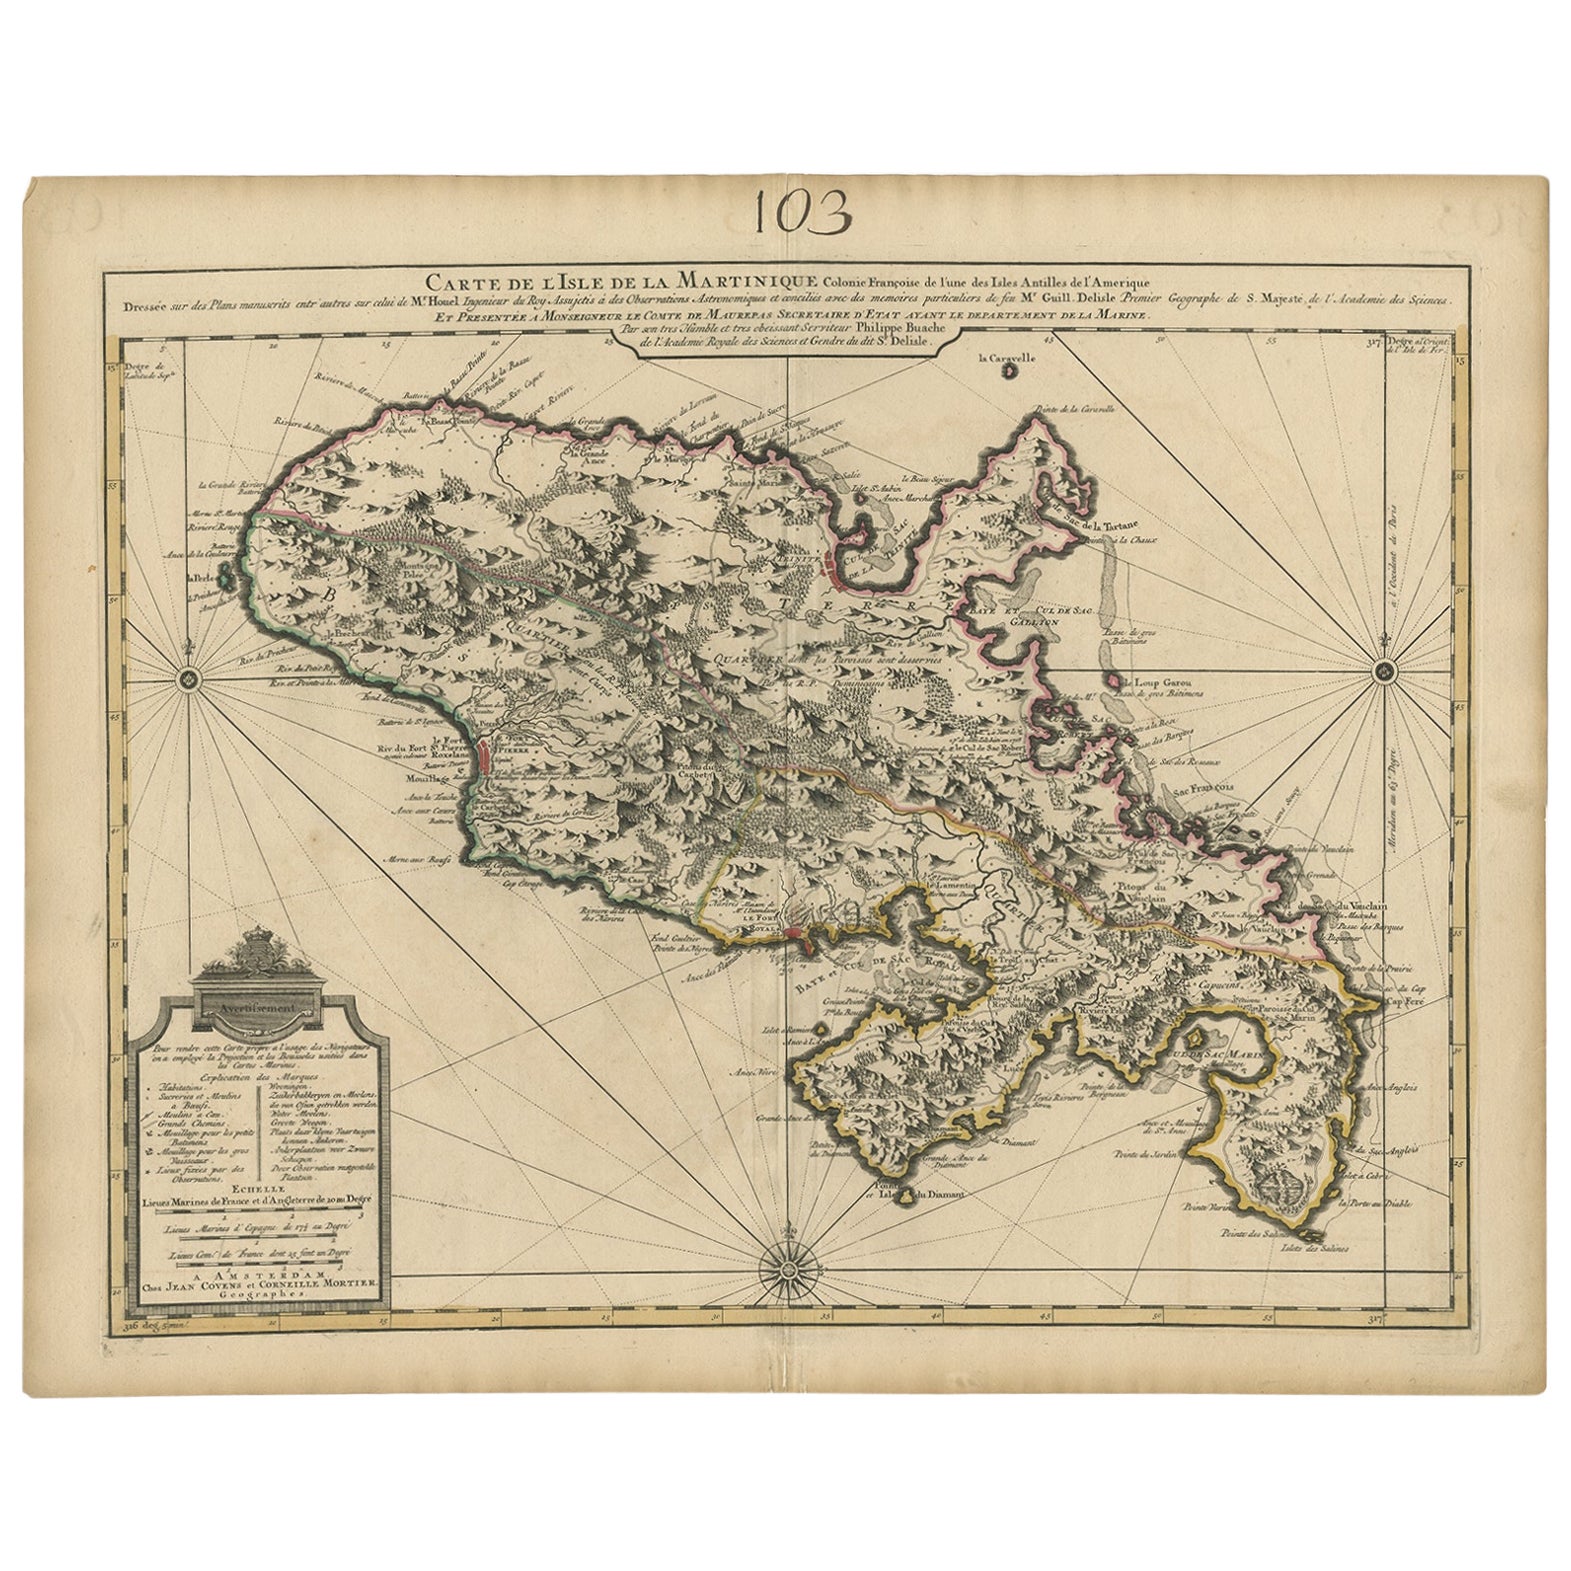 Antique Map of Martinique, Showing Roads, Houses, Sugar Plantations, etc. c.1750